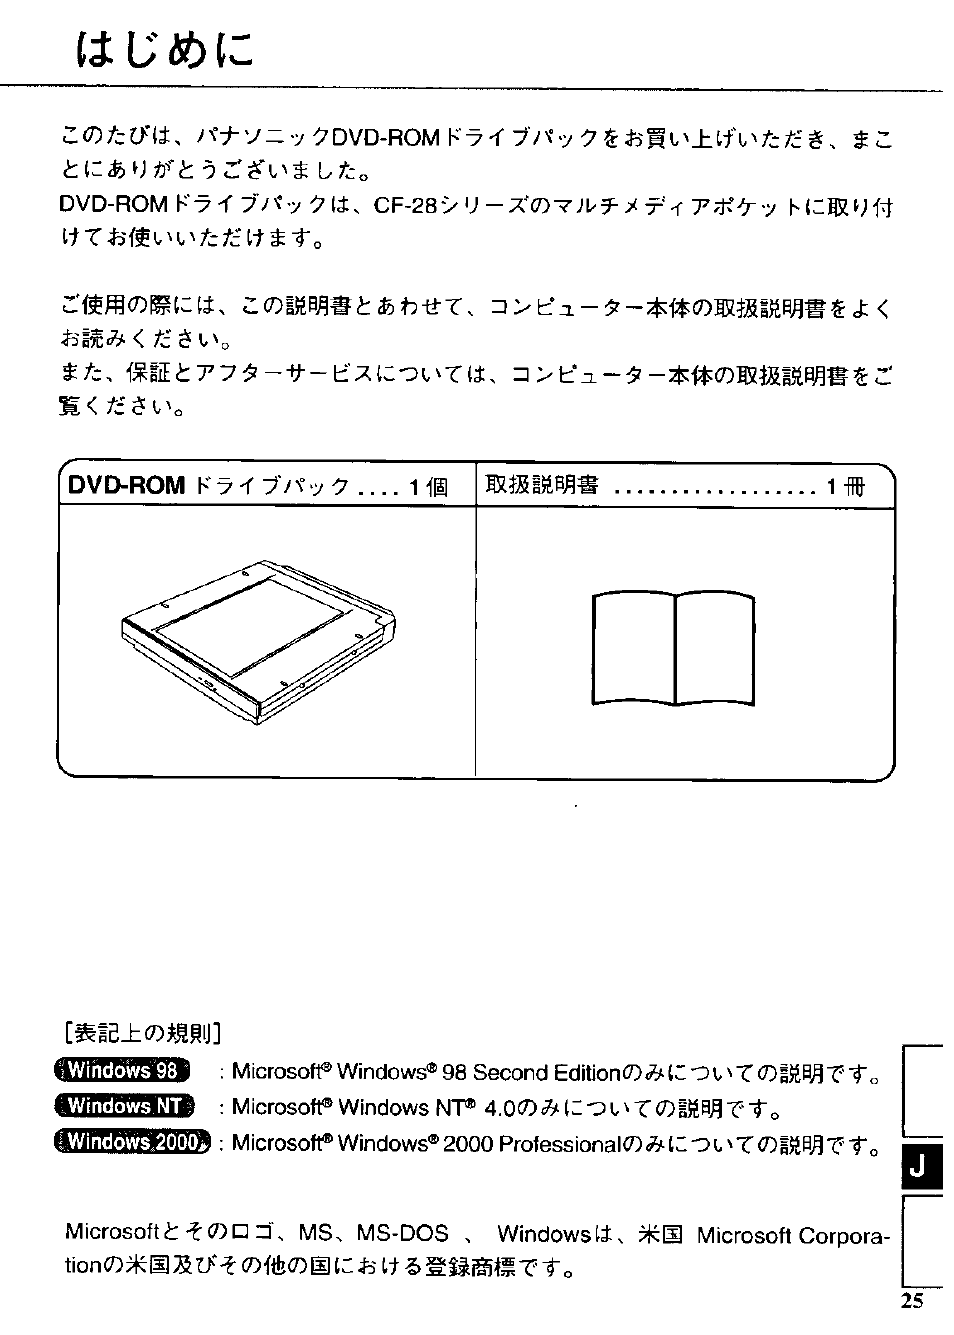 Panasonic DVD-ROM CF-VDD283 Manuel d'utilisation | Page 25 / 36